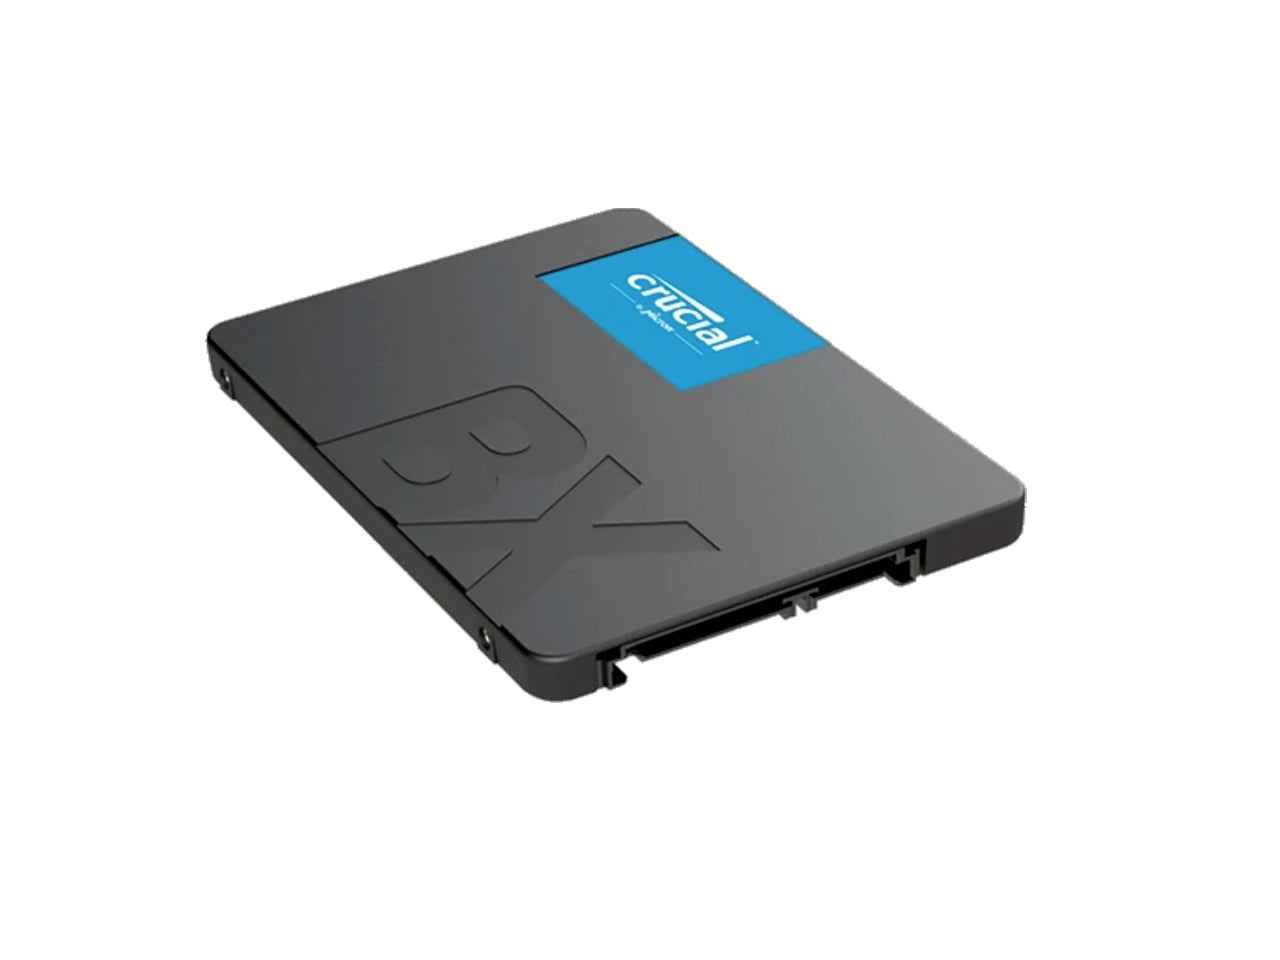 Crucial BX500 1tb 3D NAND SATA 2.5-inch CT1000BX500SSD1 SSD